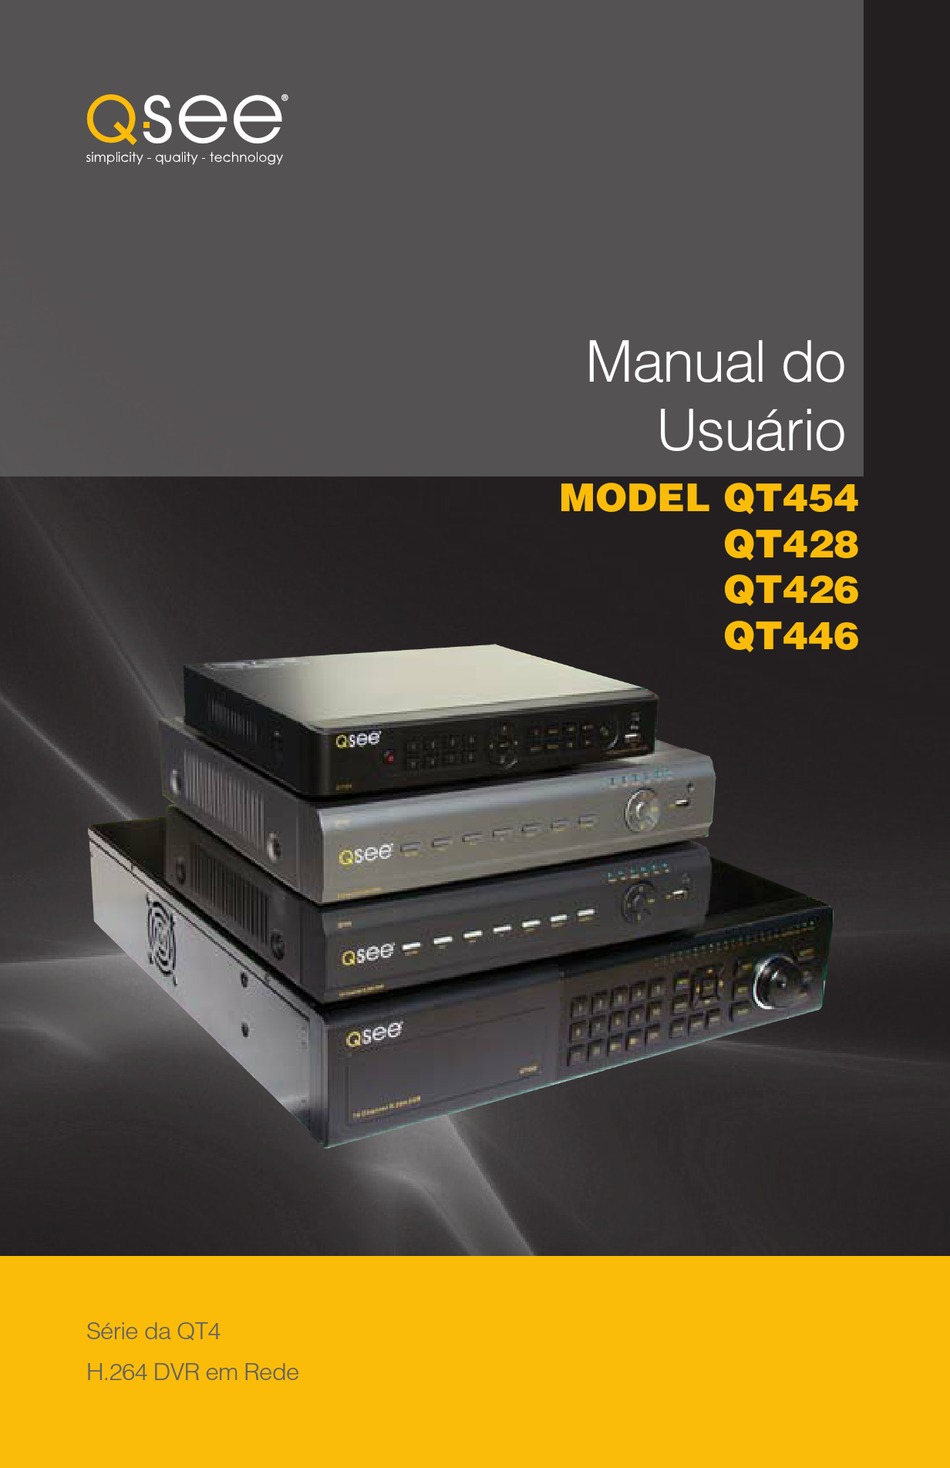 Q-SEE QT426 MANUAL DO USUÁRIO Pdf Download | ManualsLib